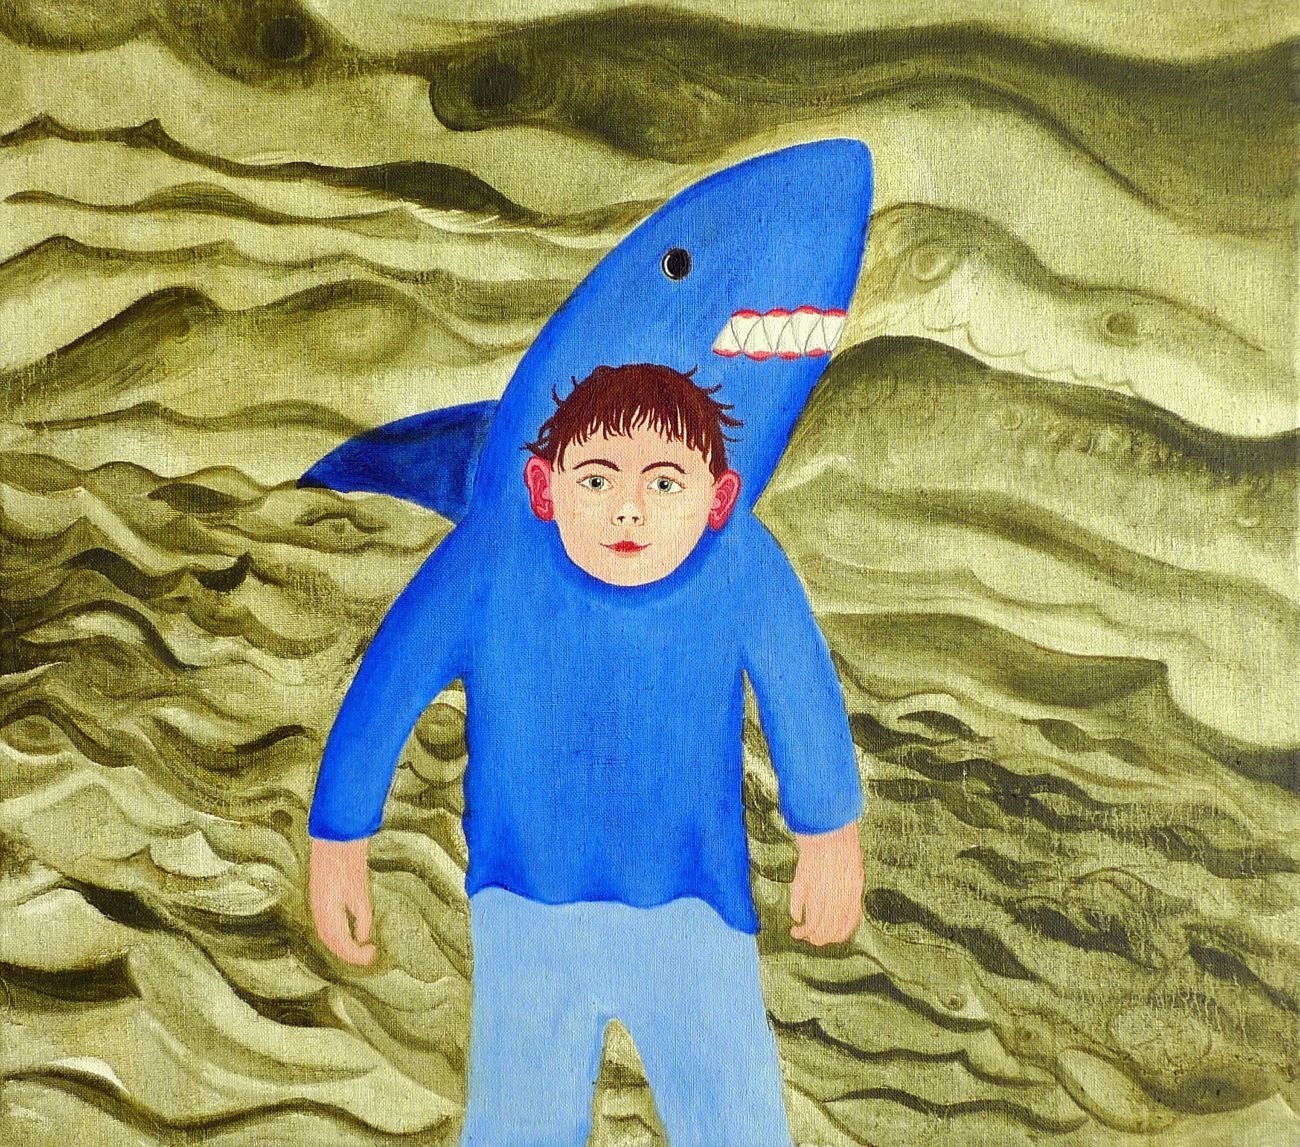 Jan Karpíšek: The Dream About Shark Costume, oil on canvas, 60x70 cm, 2012, donated in a charity auction